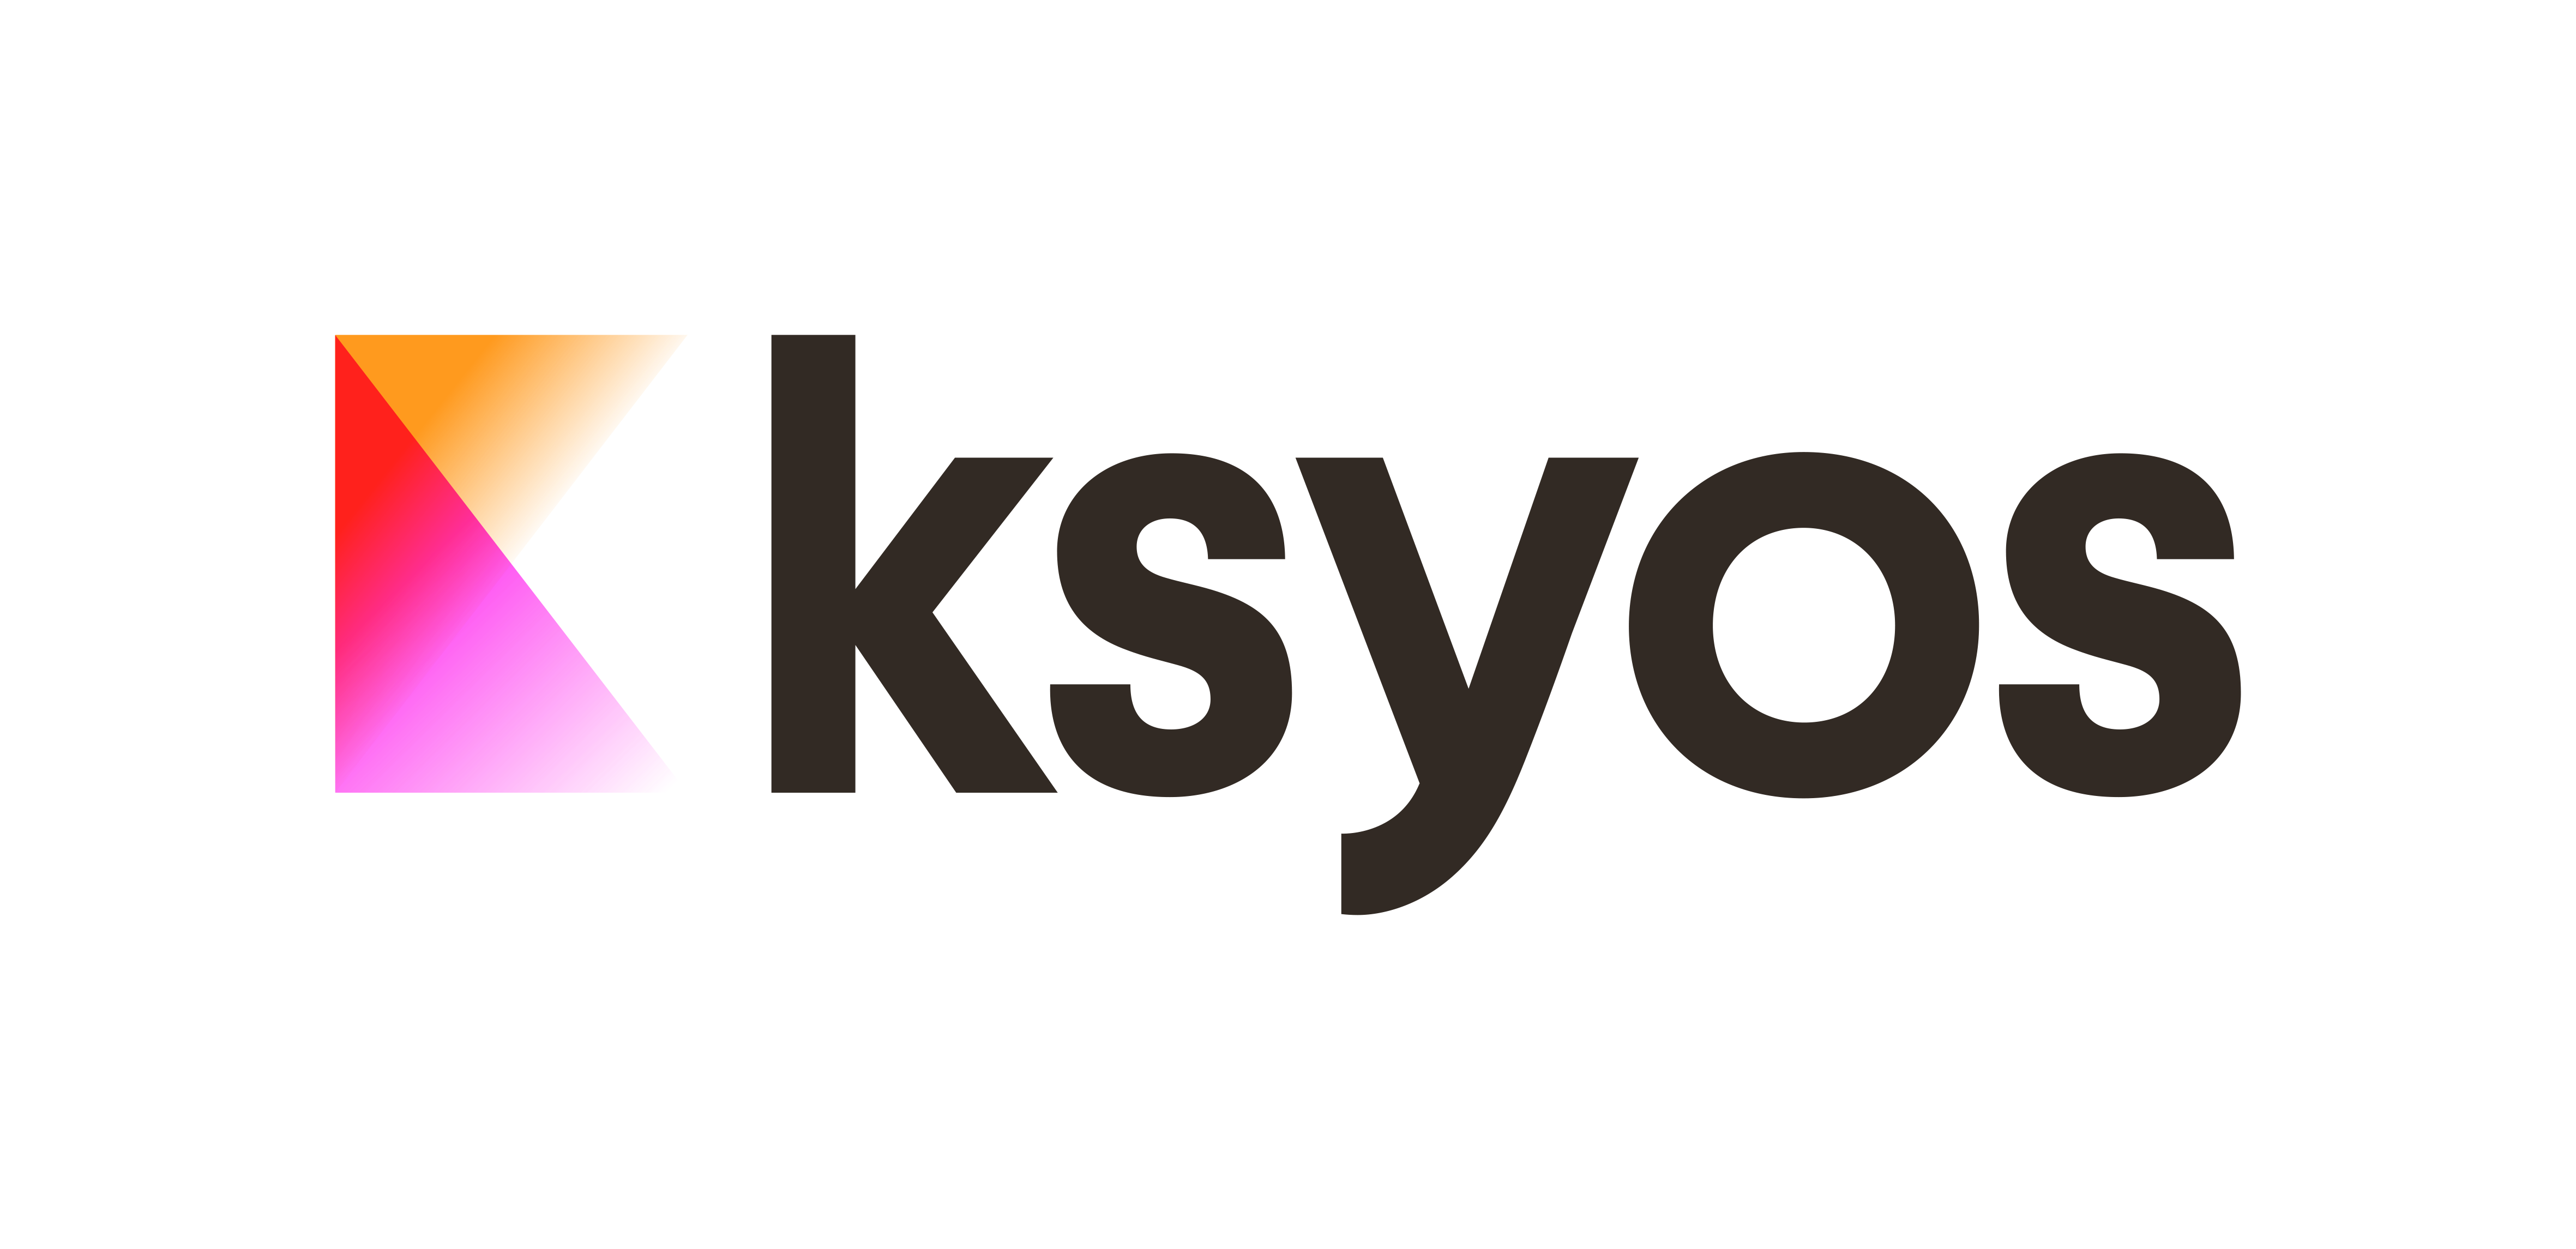 Ksyos afbeelding logo